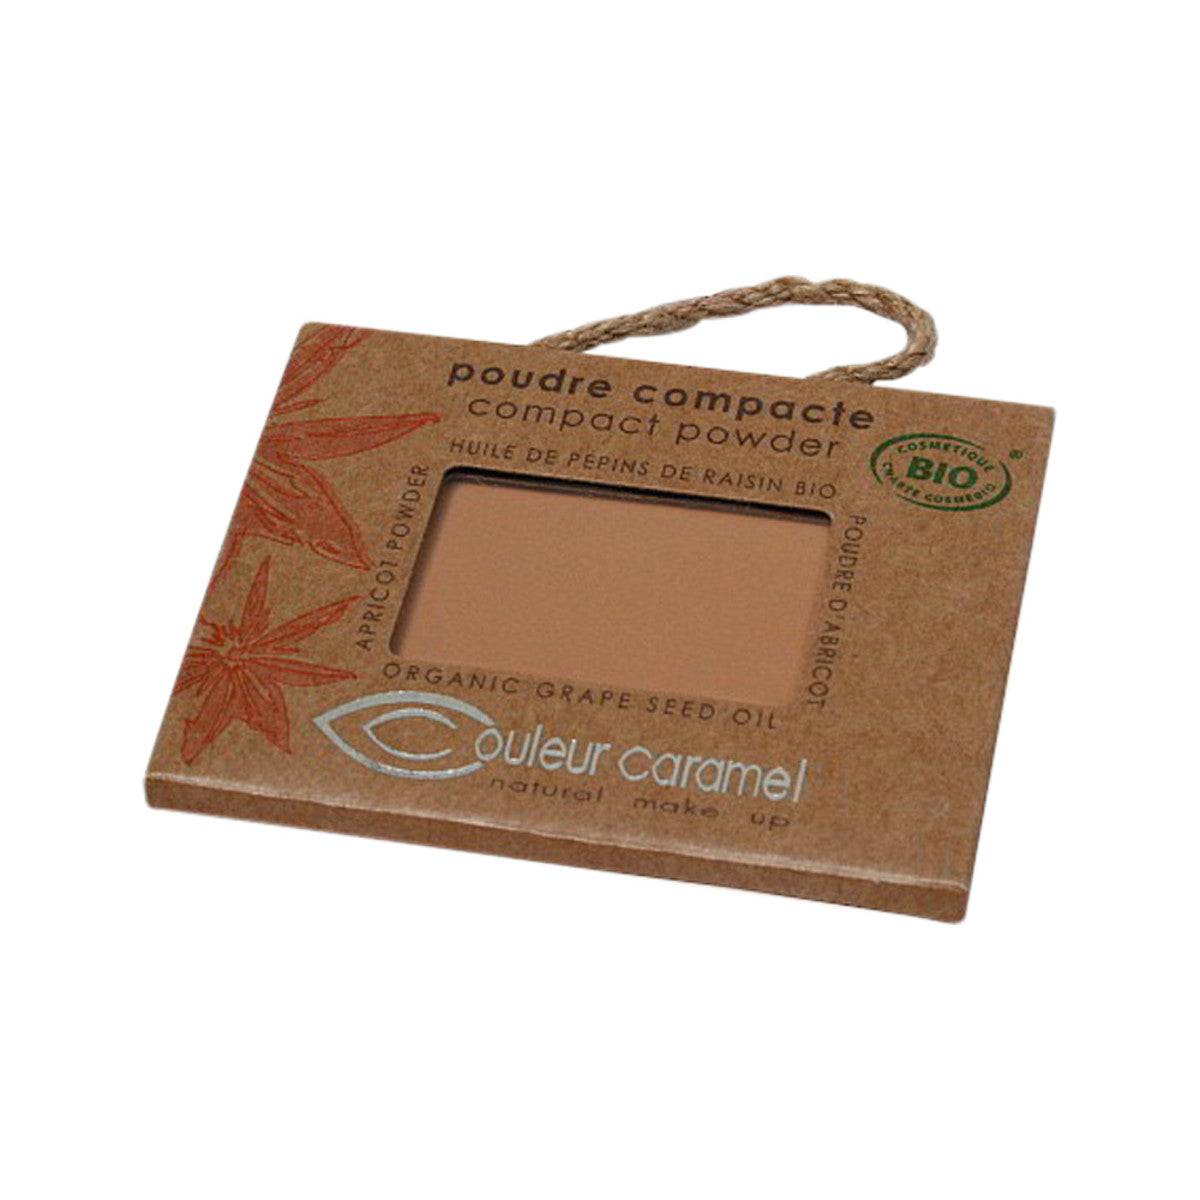 Couleur Caramel - Compact Powder Golden Brown (06)